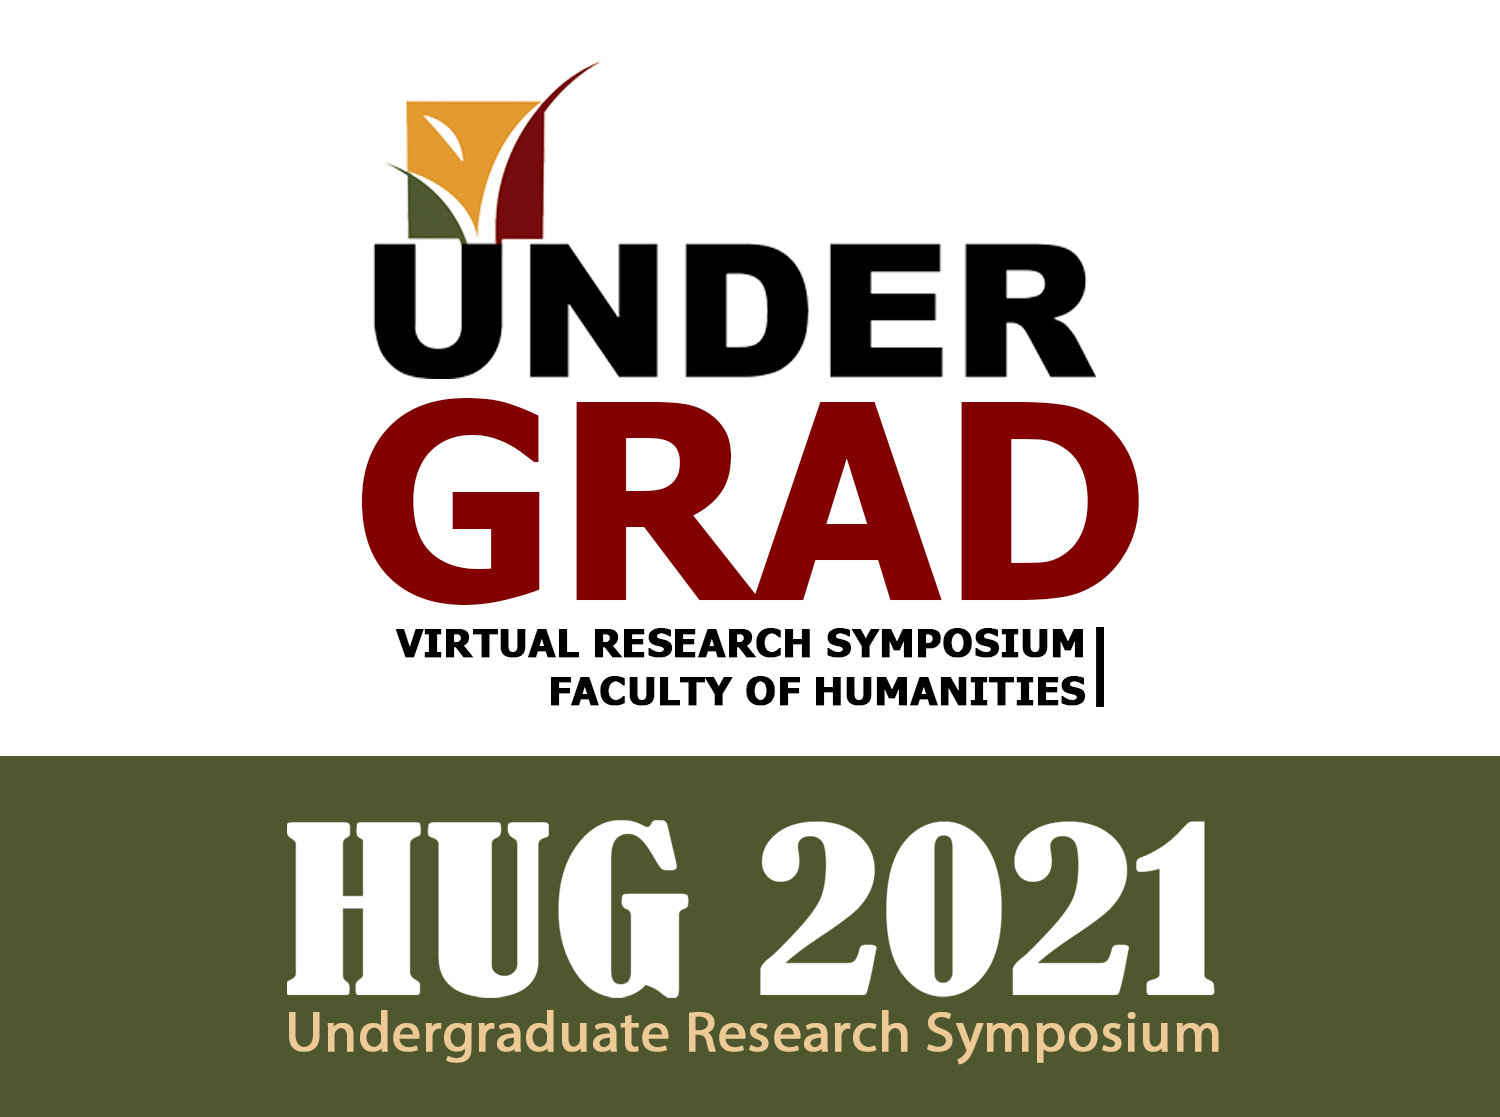 Undergraduate Research Symposium (HUG) 2021 Faculty of Humanities, University of Kelaniya